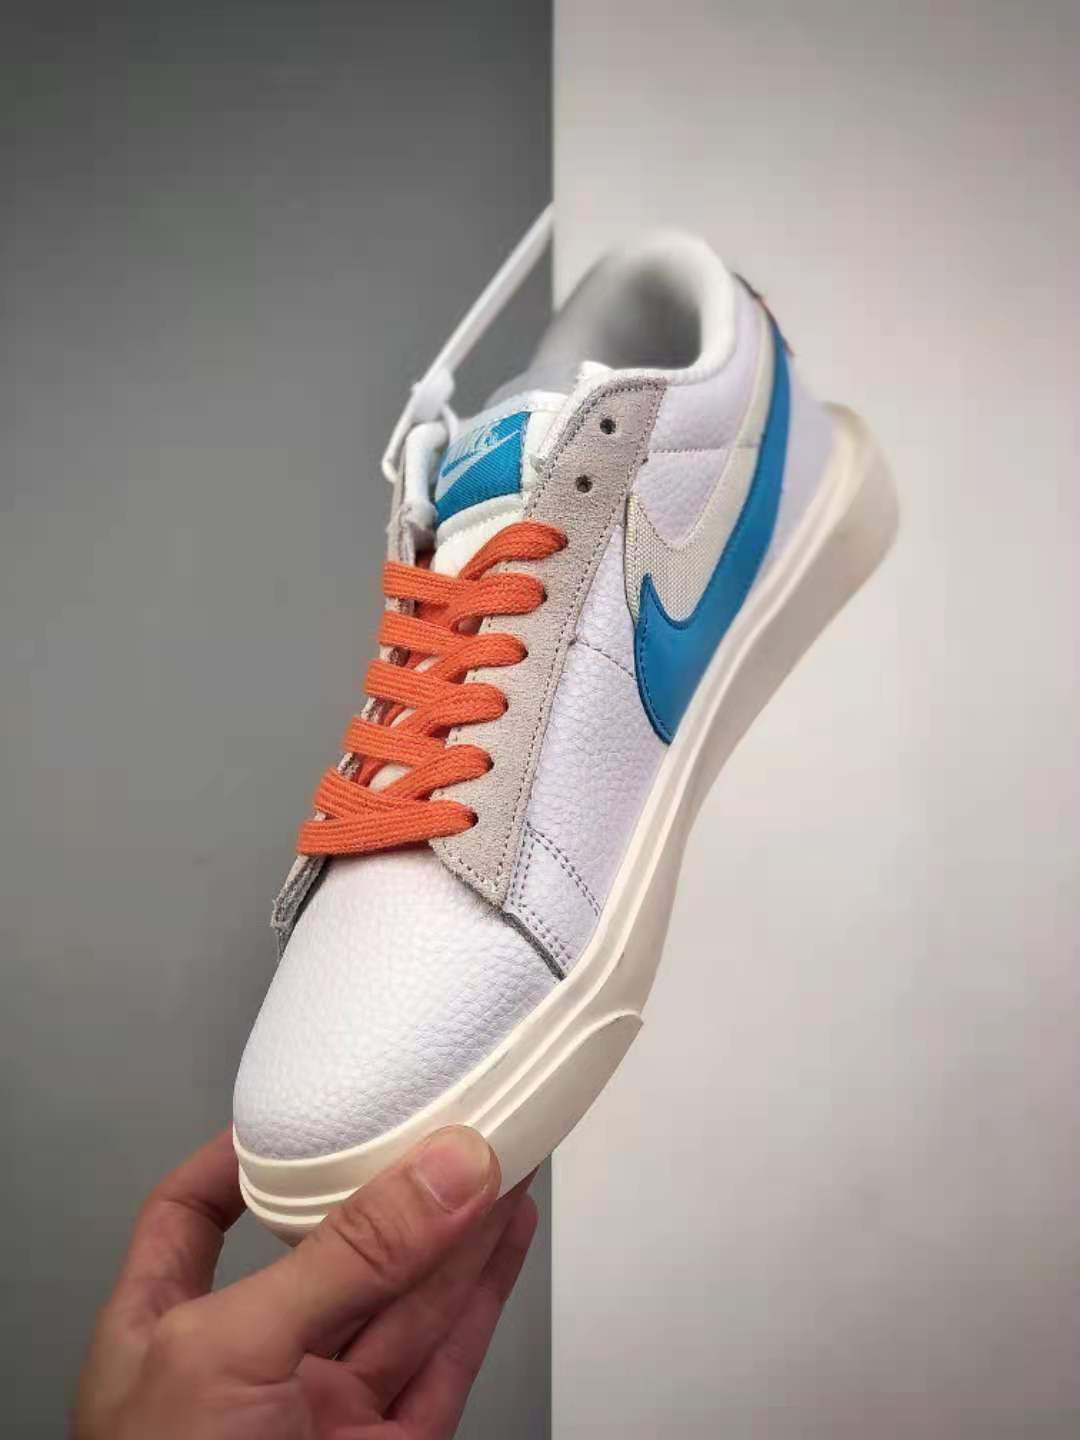 Sacai x Nike SB Blazer Low: White Blue Orange Shoes BV0076-104 | Limited Edition Collaboration